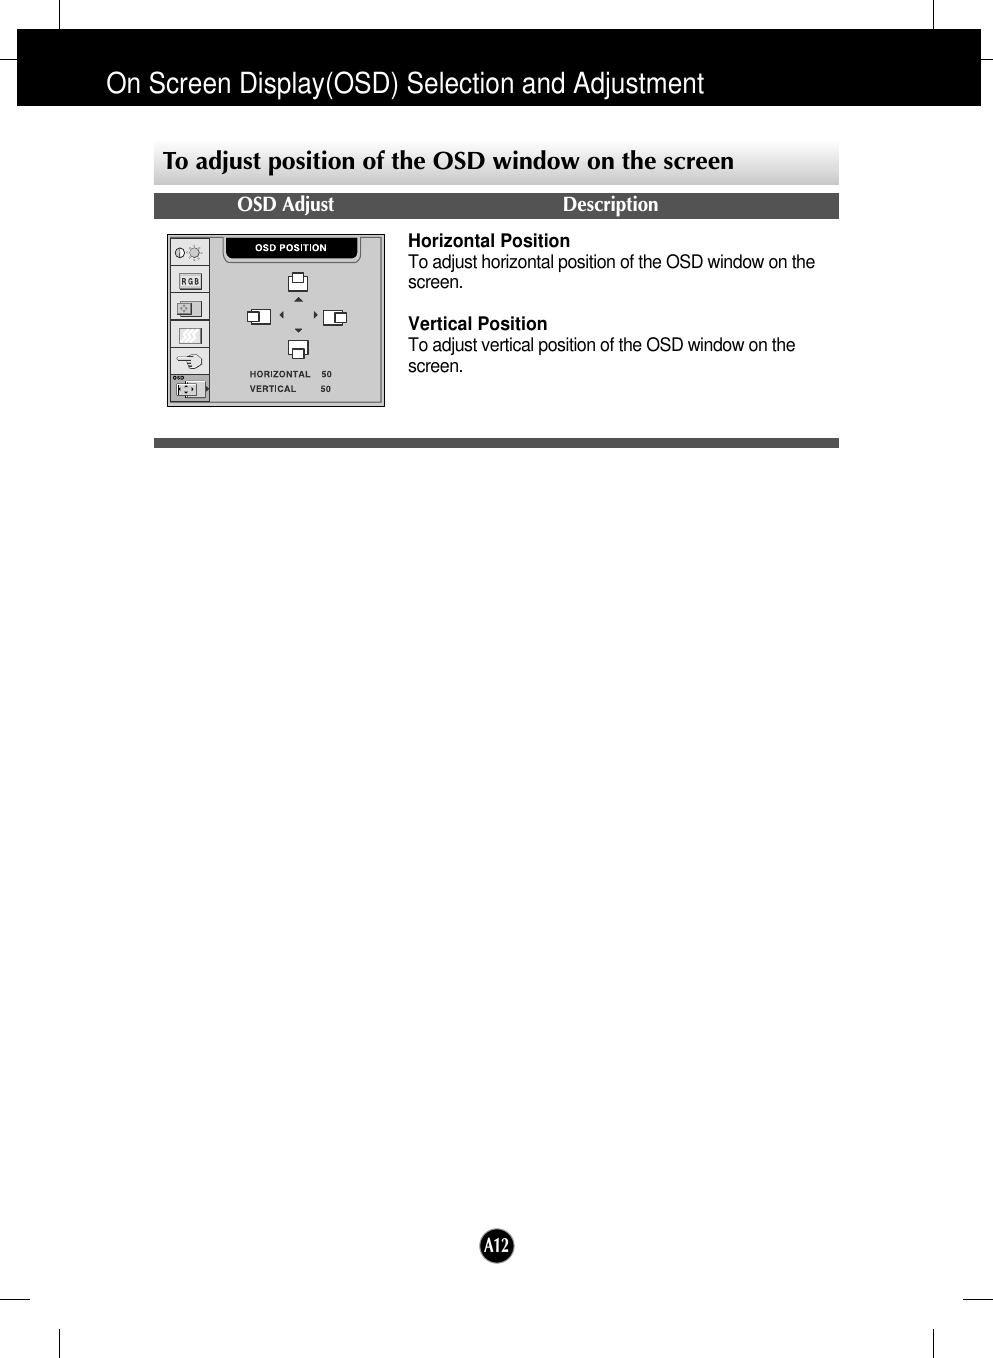 A12To adjust position of the OSD window on the screenOSD Adjust DescriptionHorizontal PositionTo adjust horizontal position of the OSD window on thescreen.Vertical PositionTo adjust vertical position of the OSD window on thescreen.On Screen Display(OSD) Selection and Adjustment 